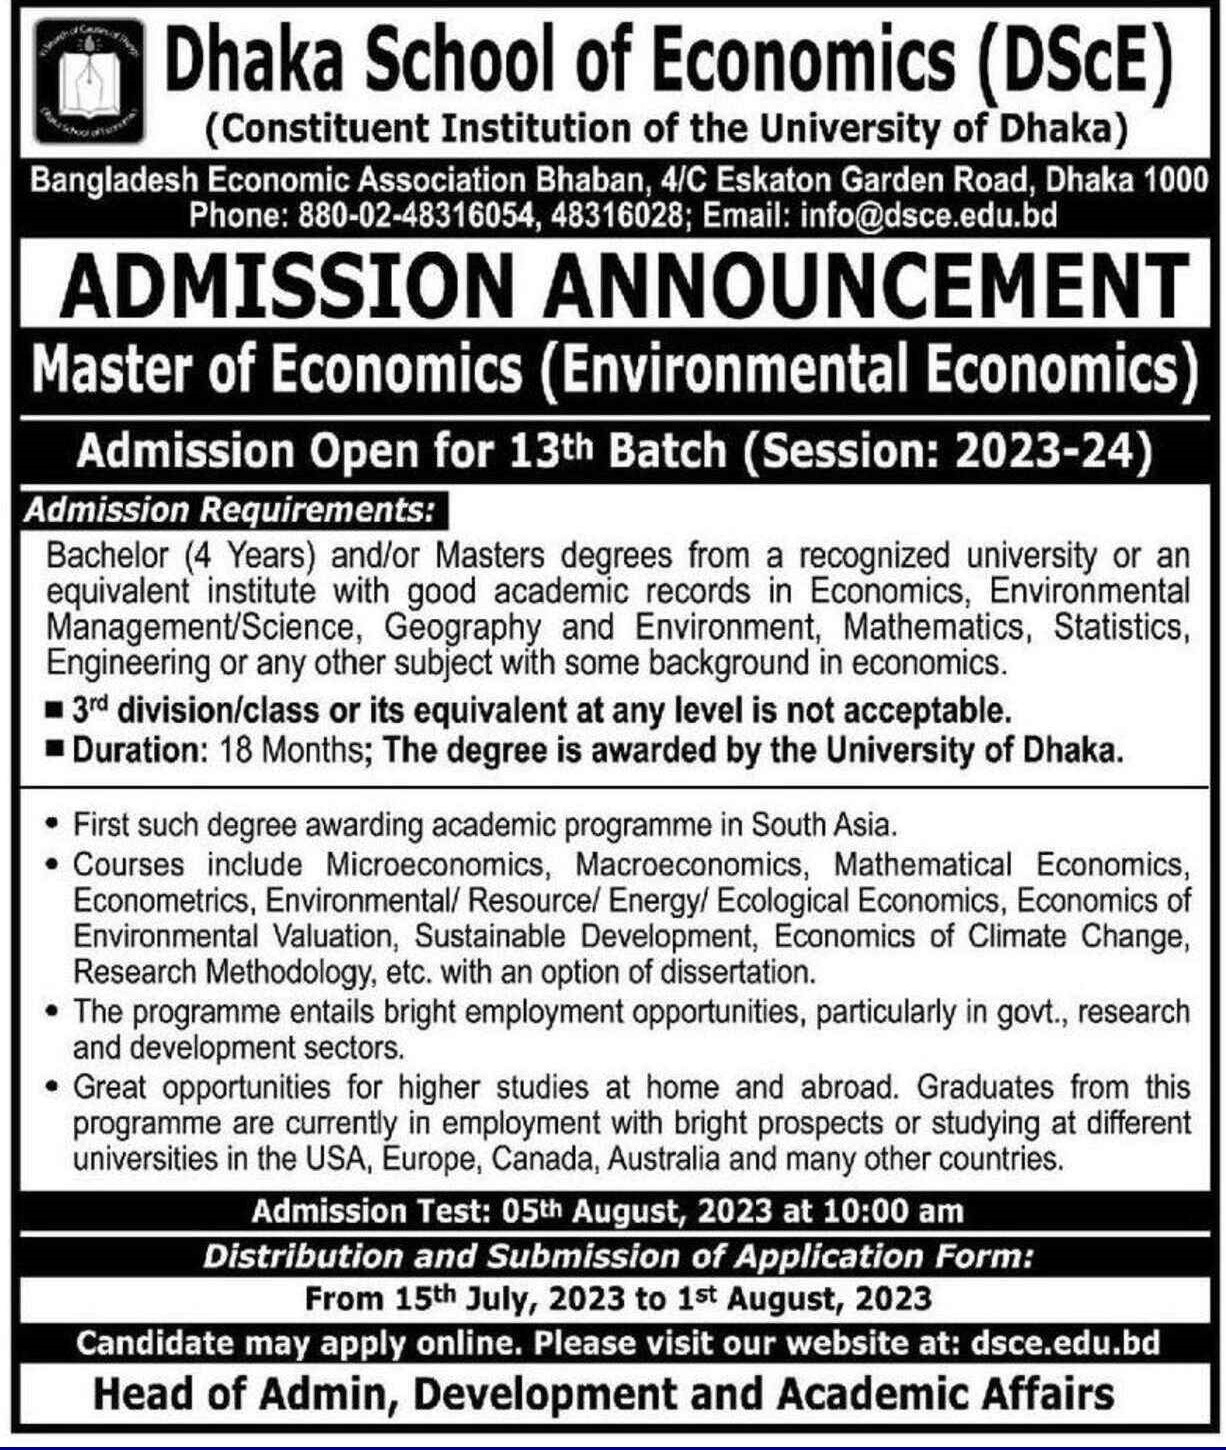 Dhaka School of Economics Admission for Master of Environmental Economics